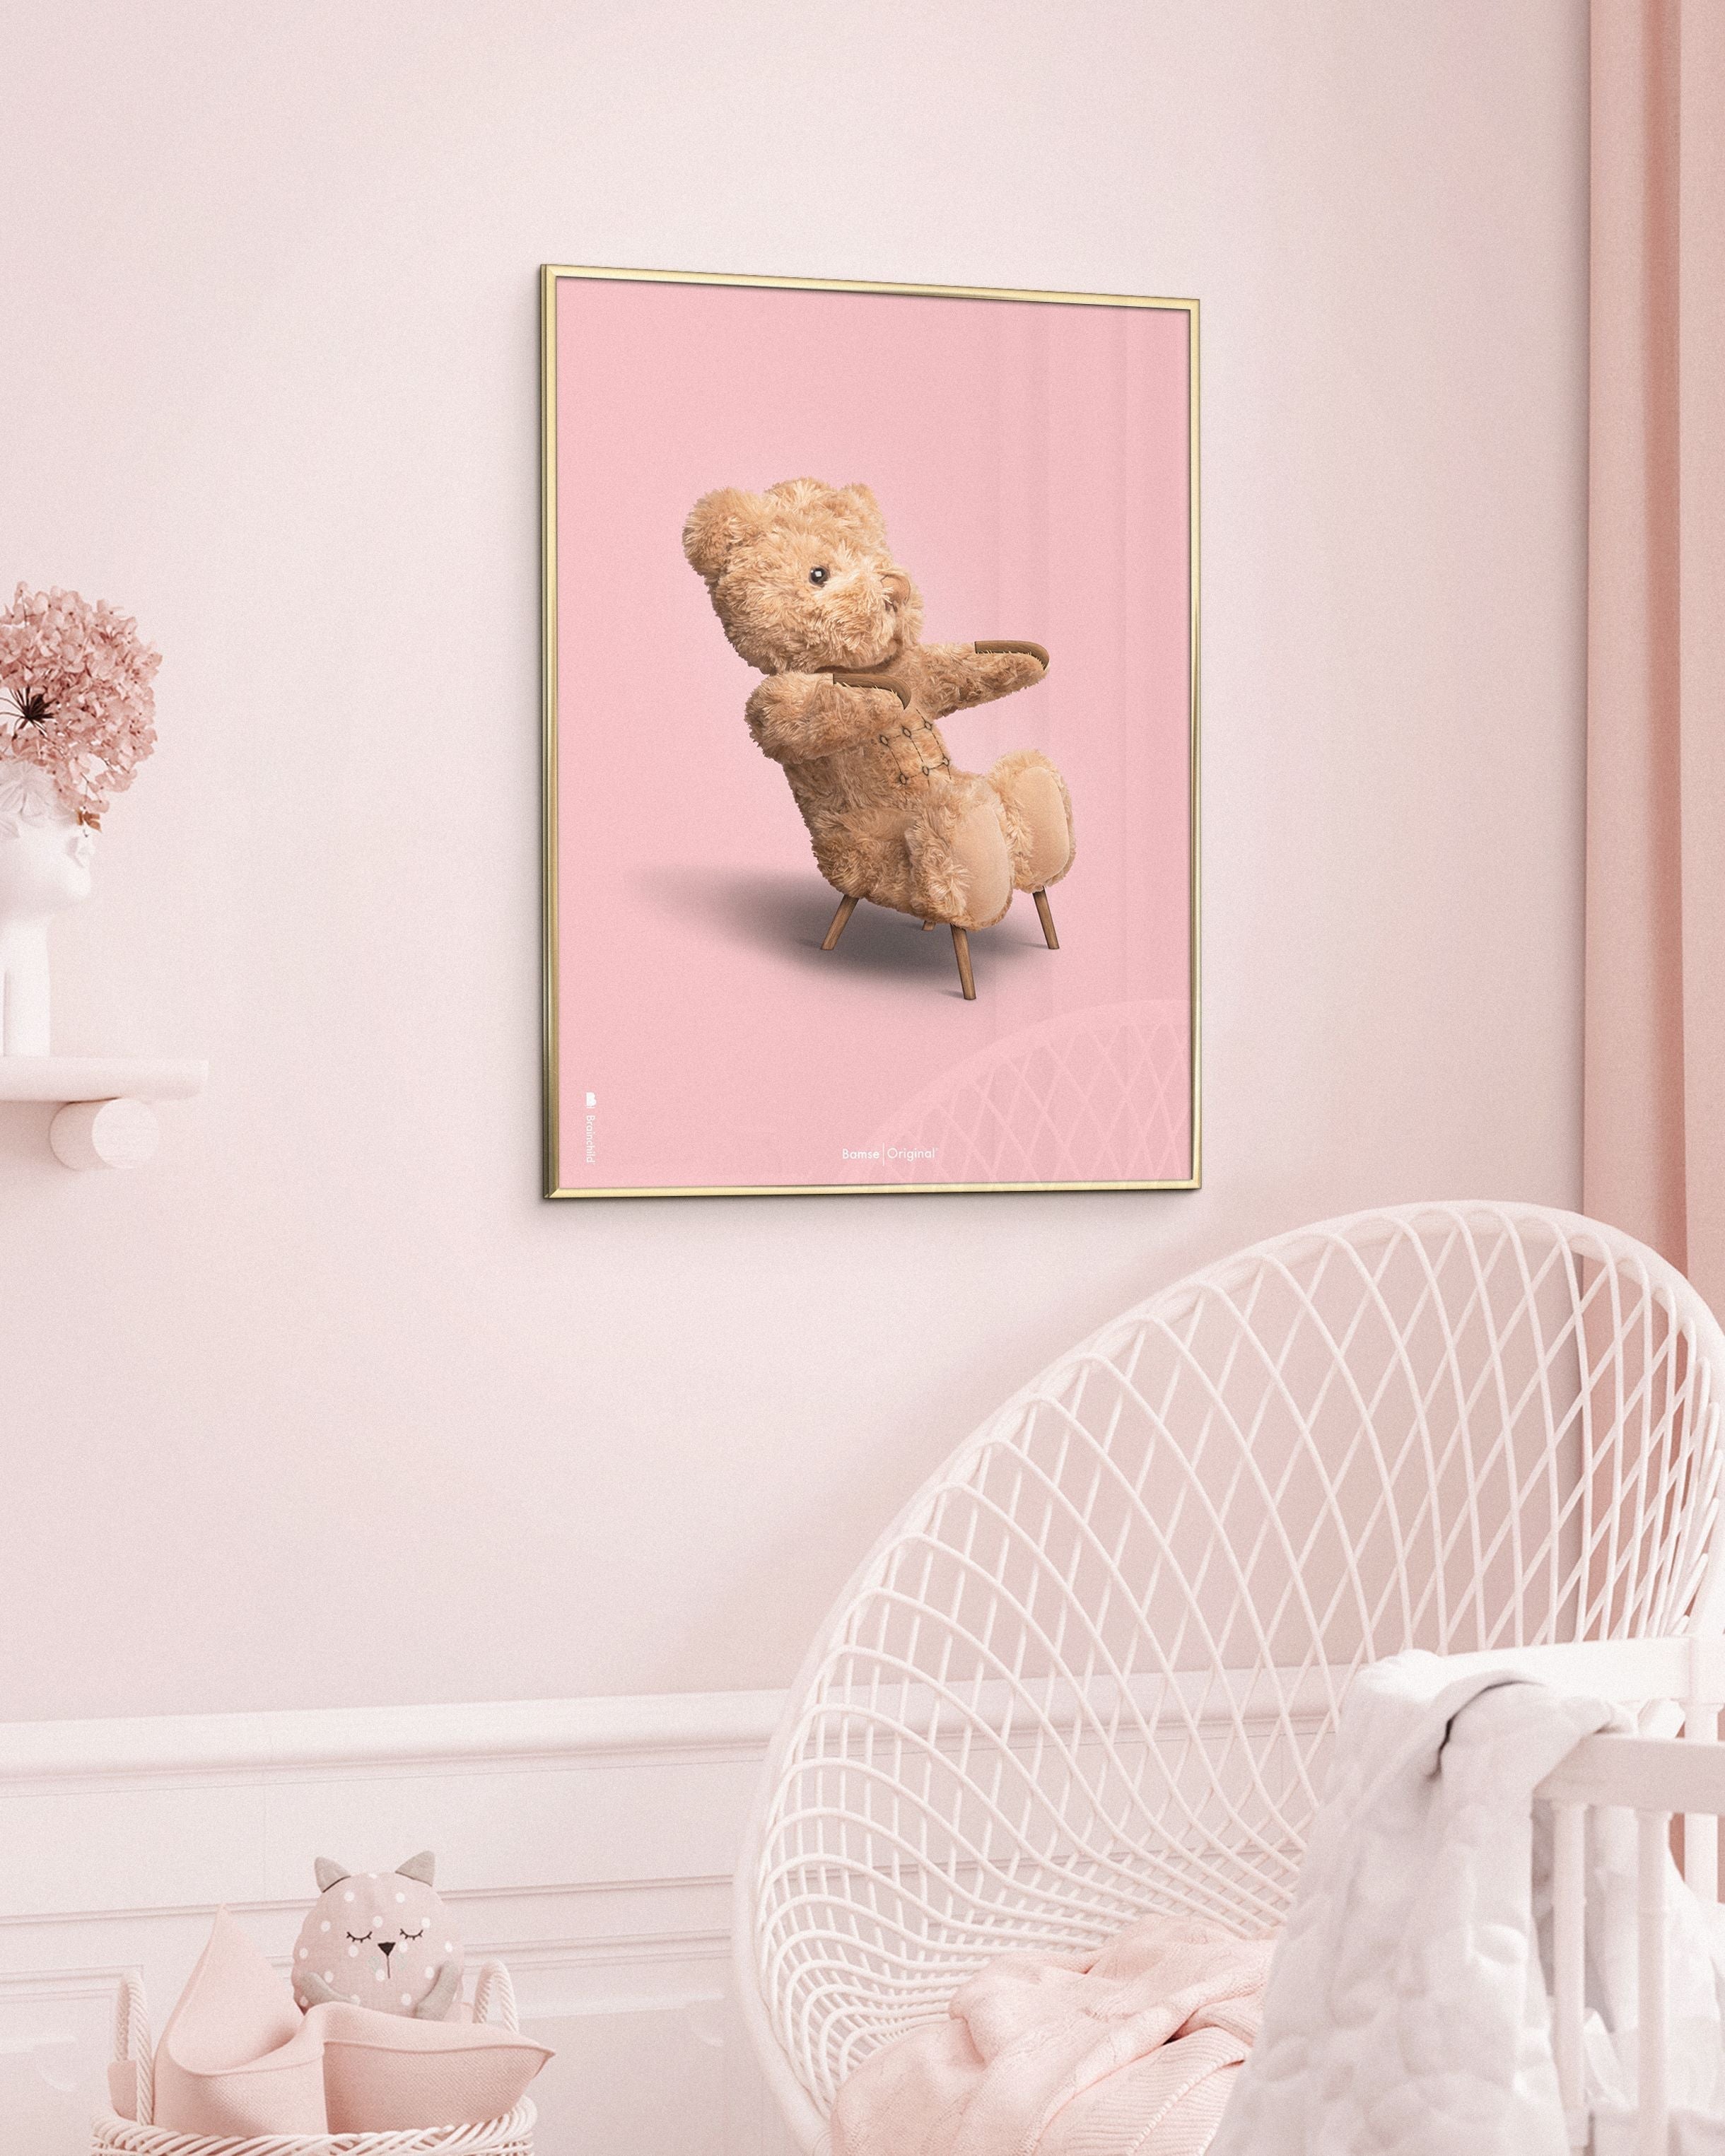 Brainchild Teddy Bear Classic Poster Light Wood Frame Ramme A5, Pink Background